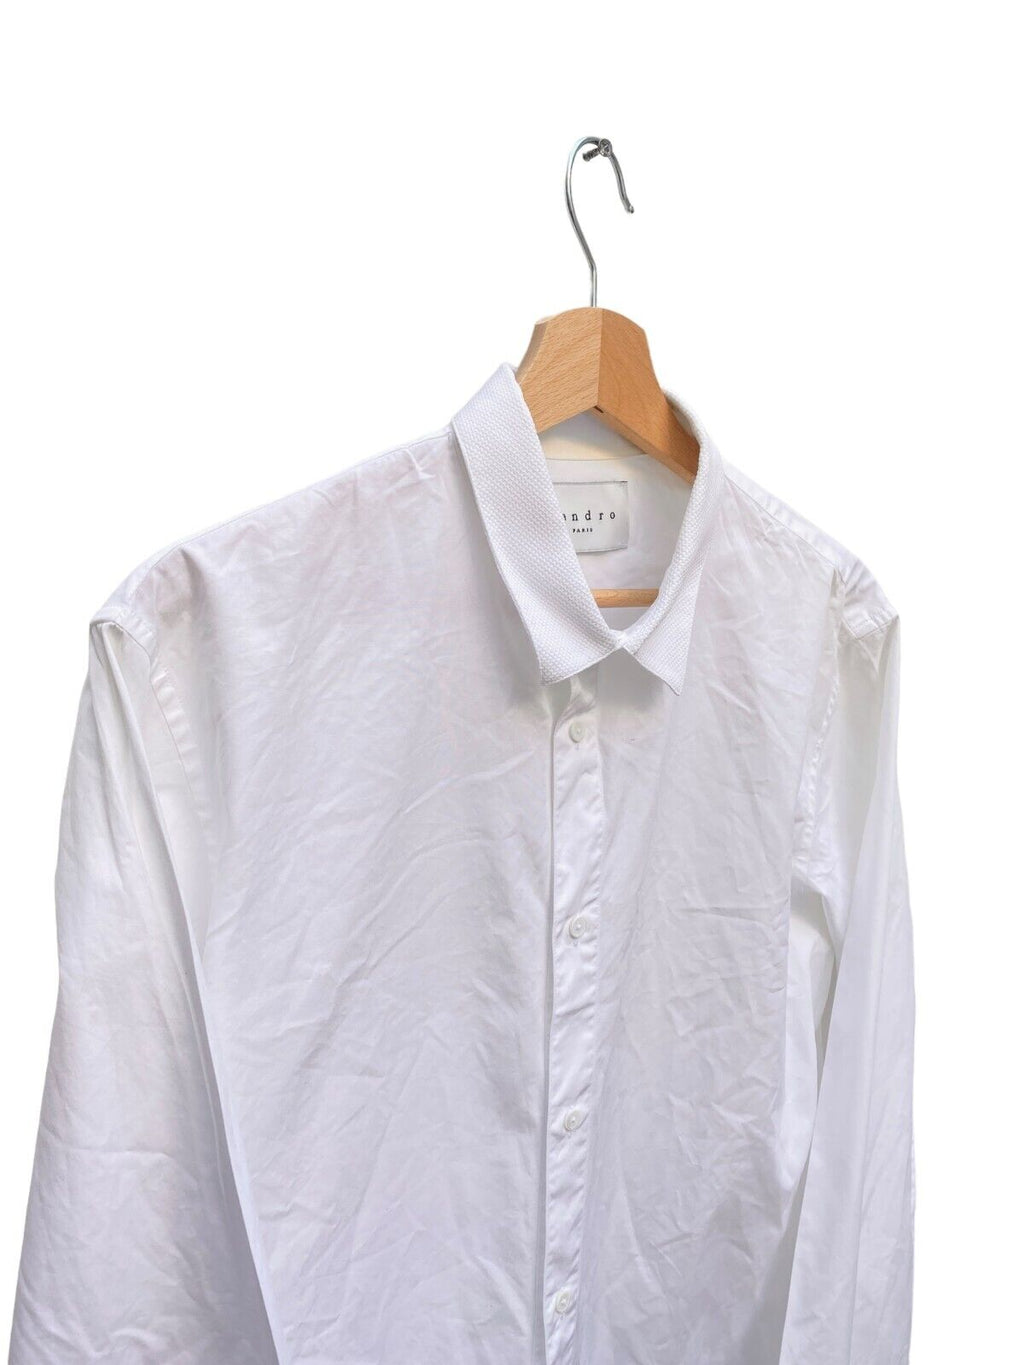 White Shirt  Contrast Textured Collar